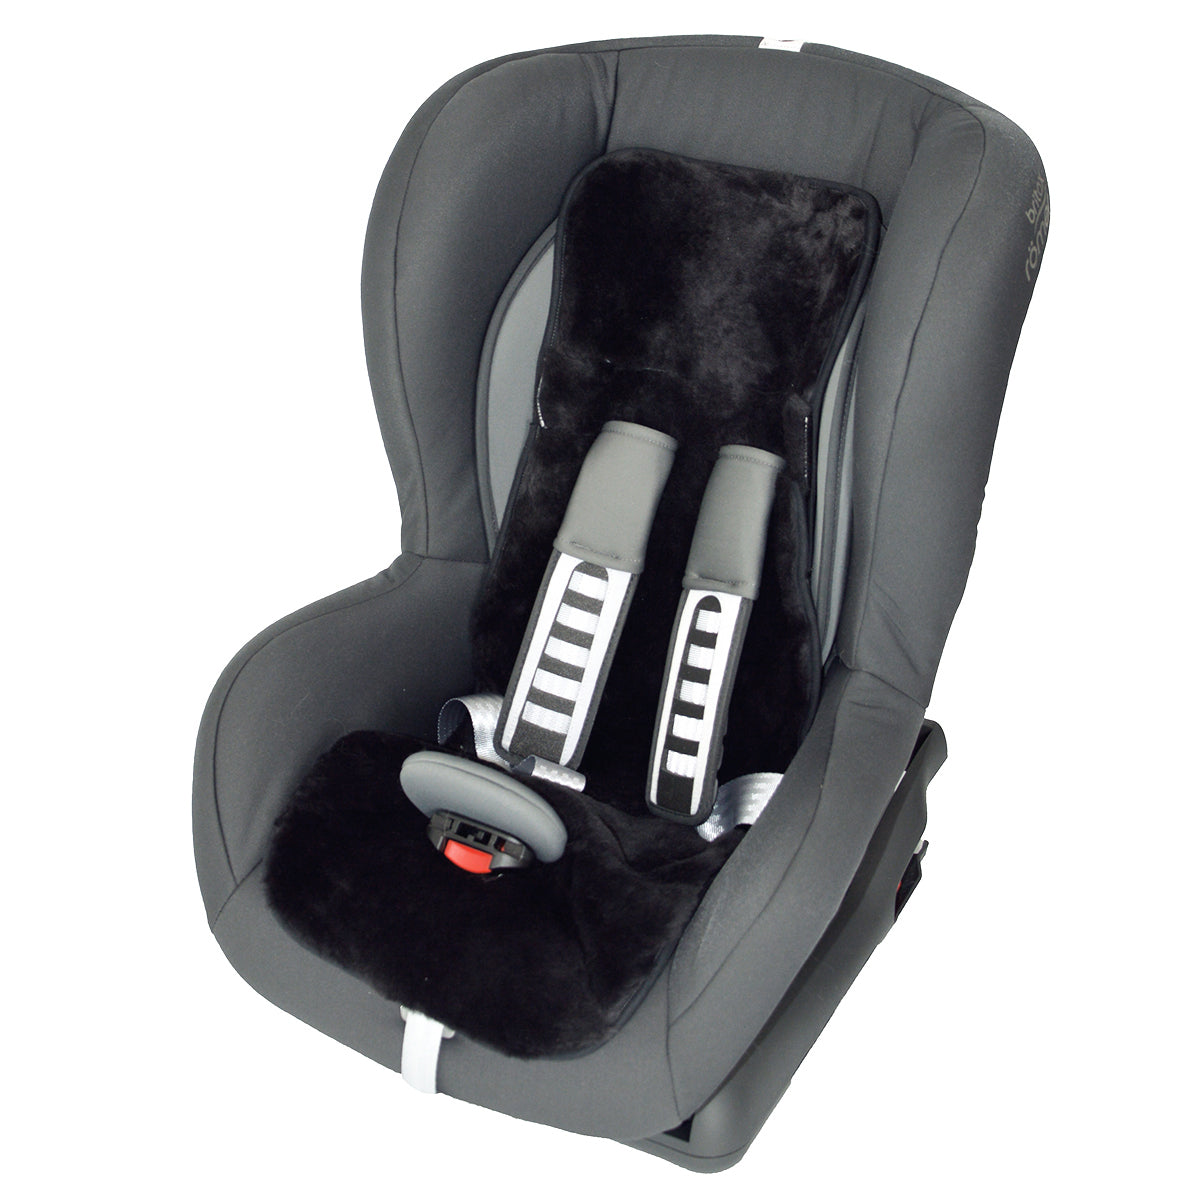 Autositz Kissen Pad Komfort Sitzschutz für Auto Fahrersitz